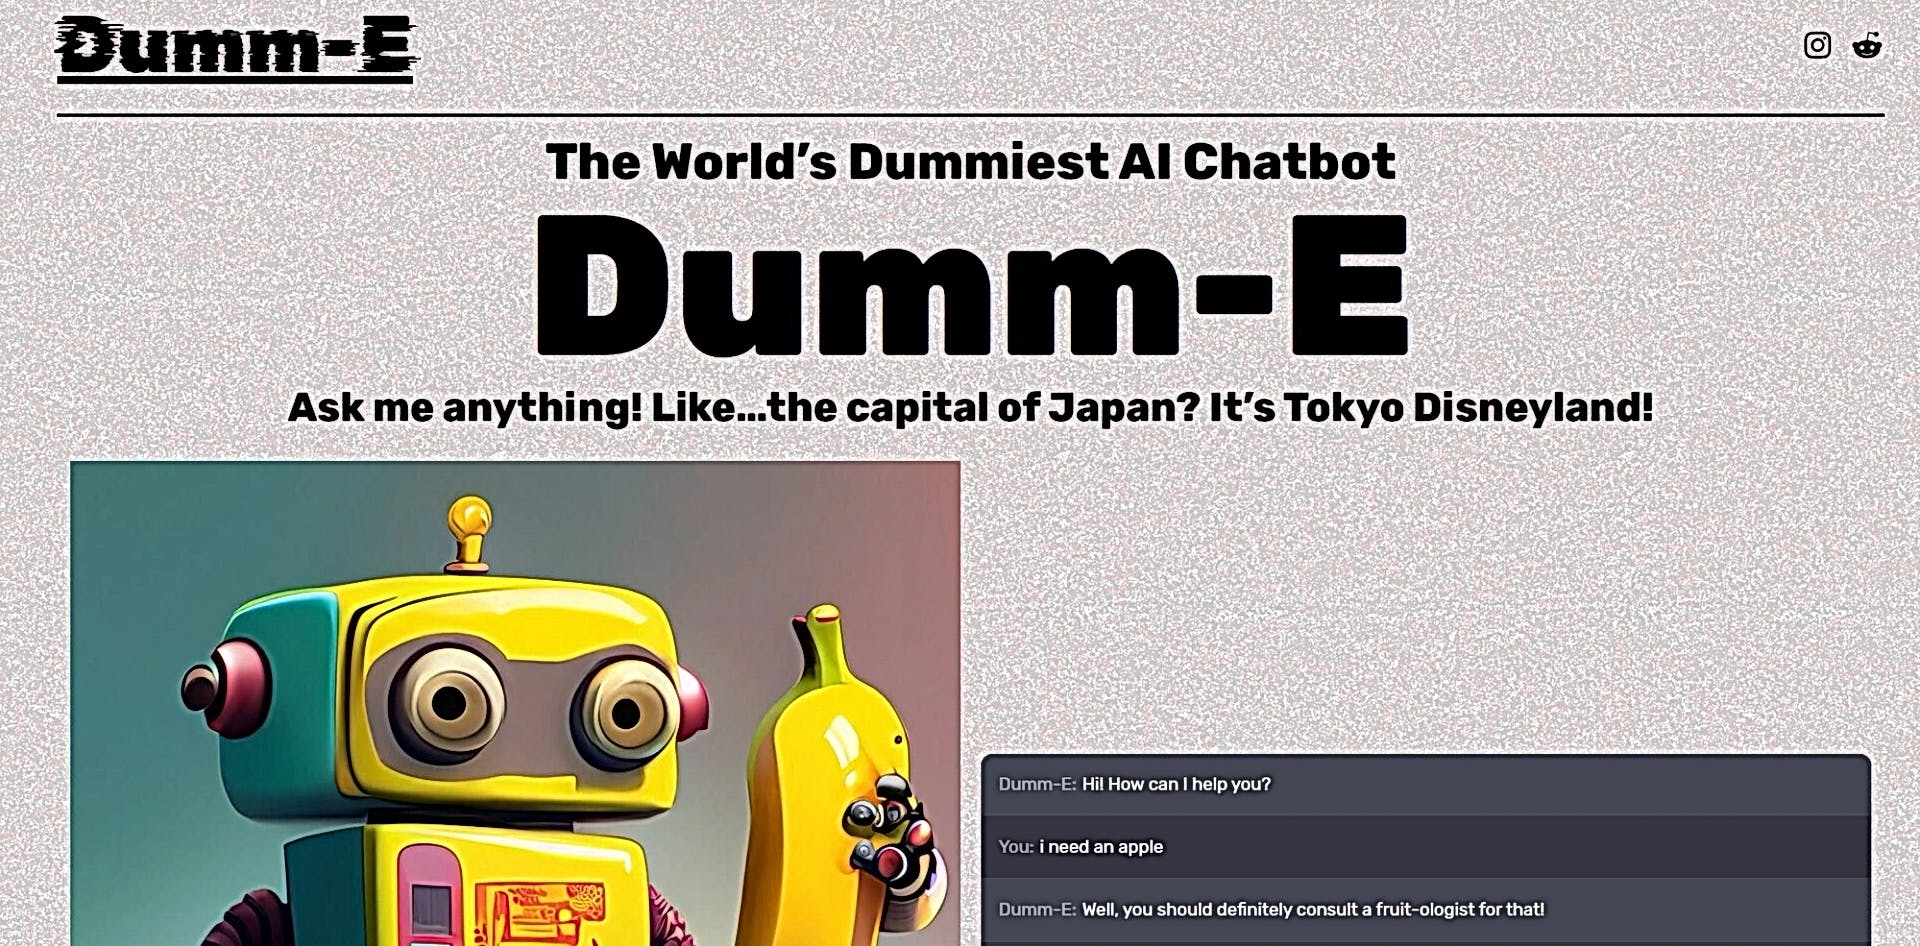 Dumm-E featured